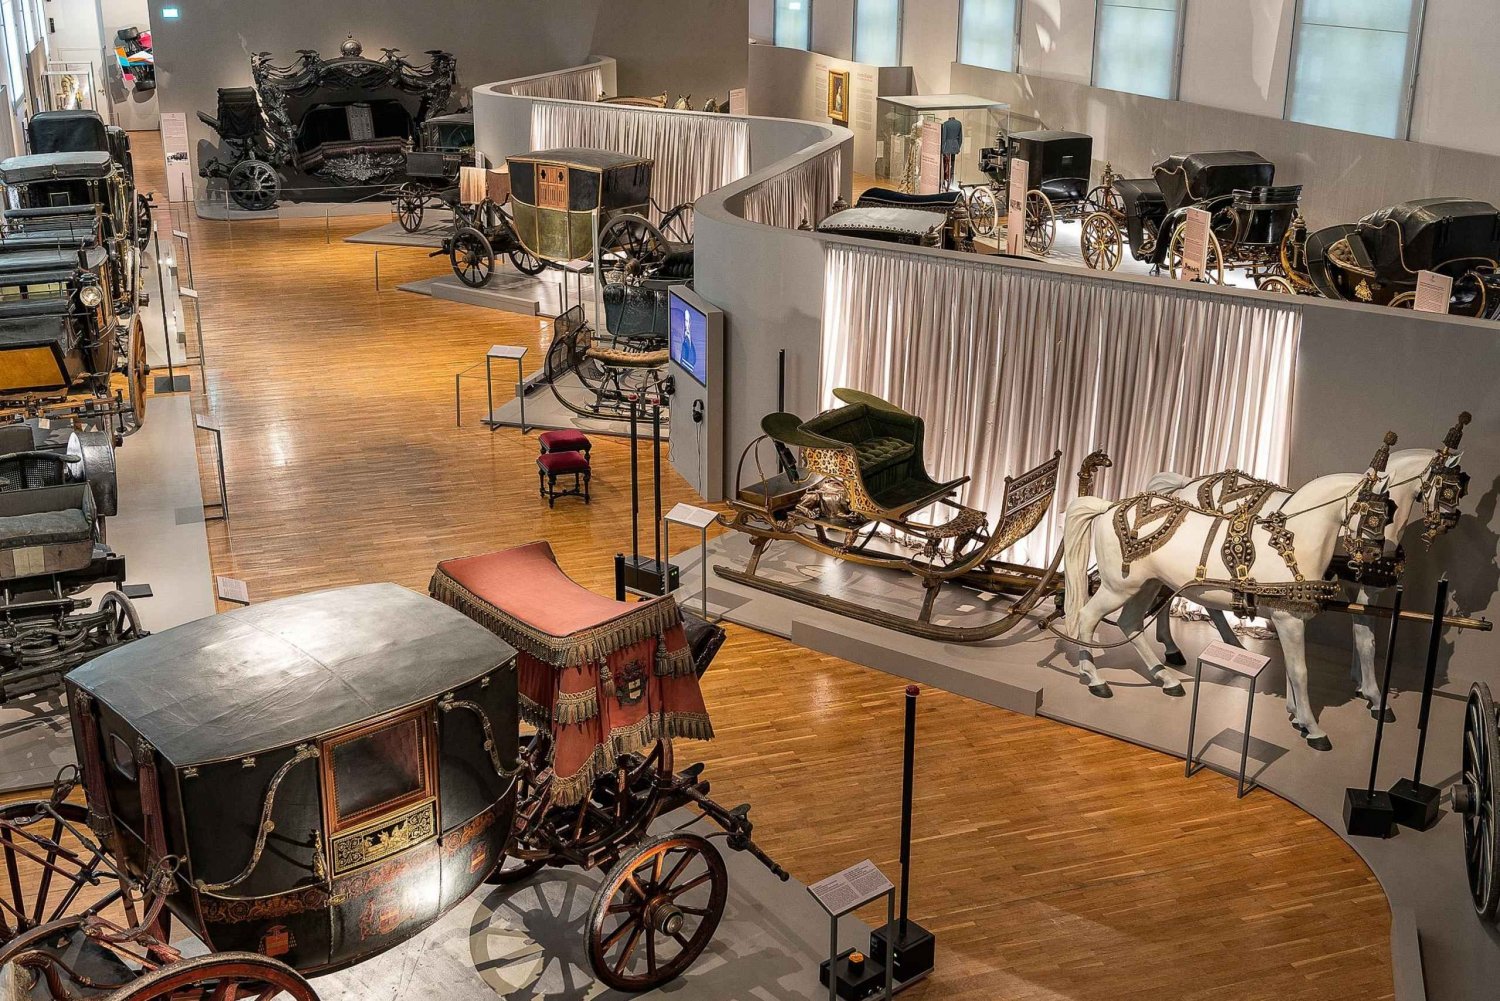 Wien: Det keiserlig vognmuseum i Schönbrunn palassbillett